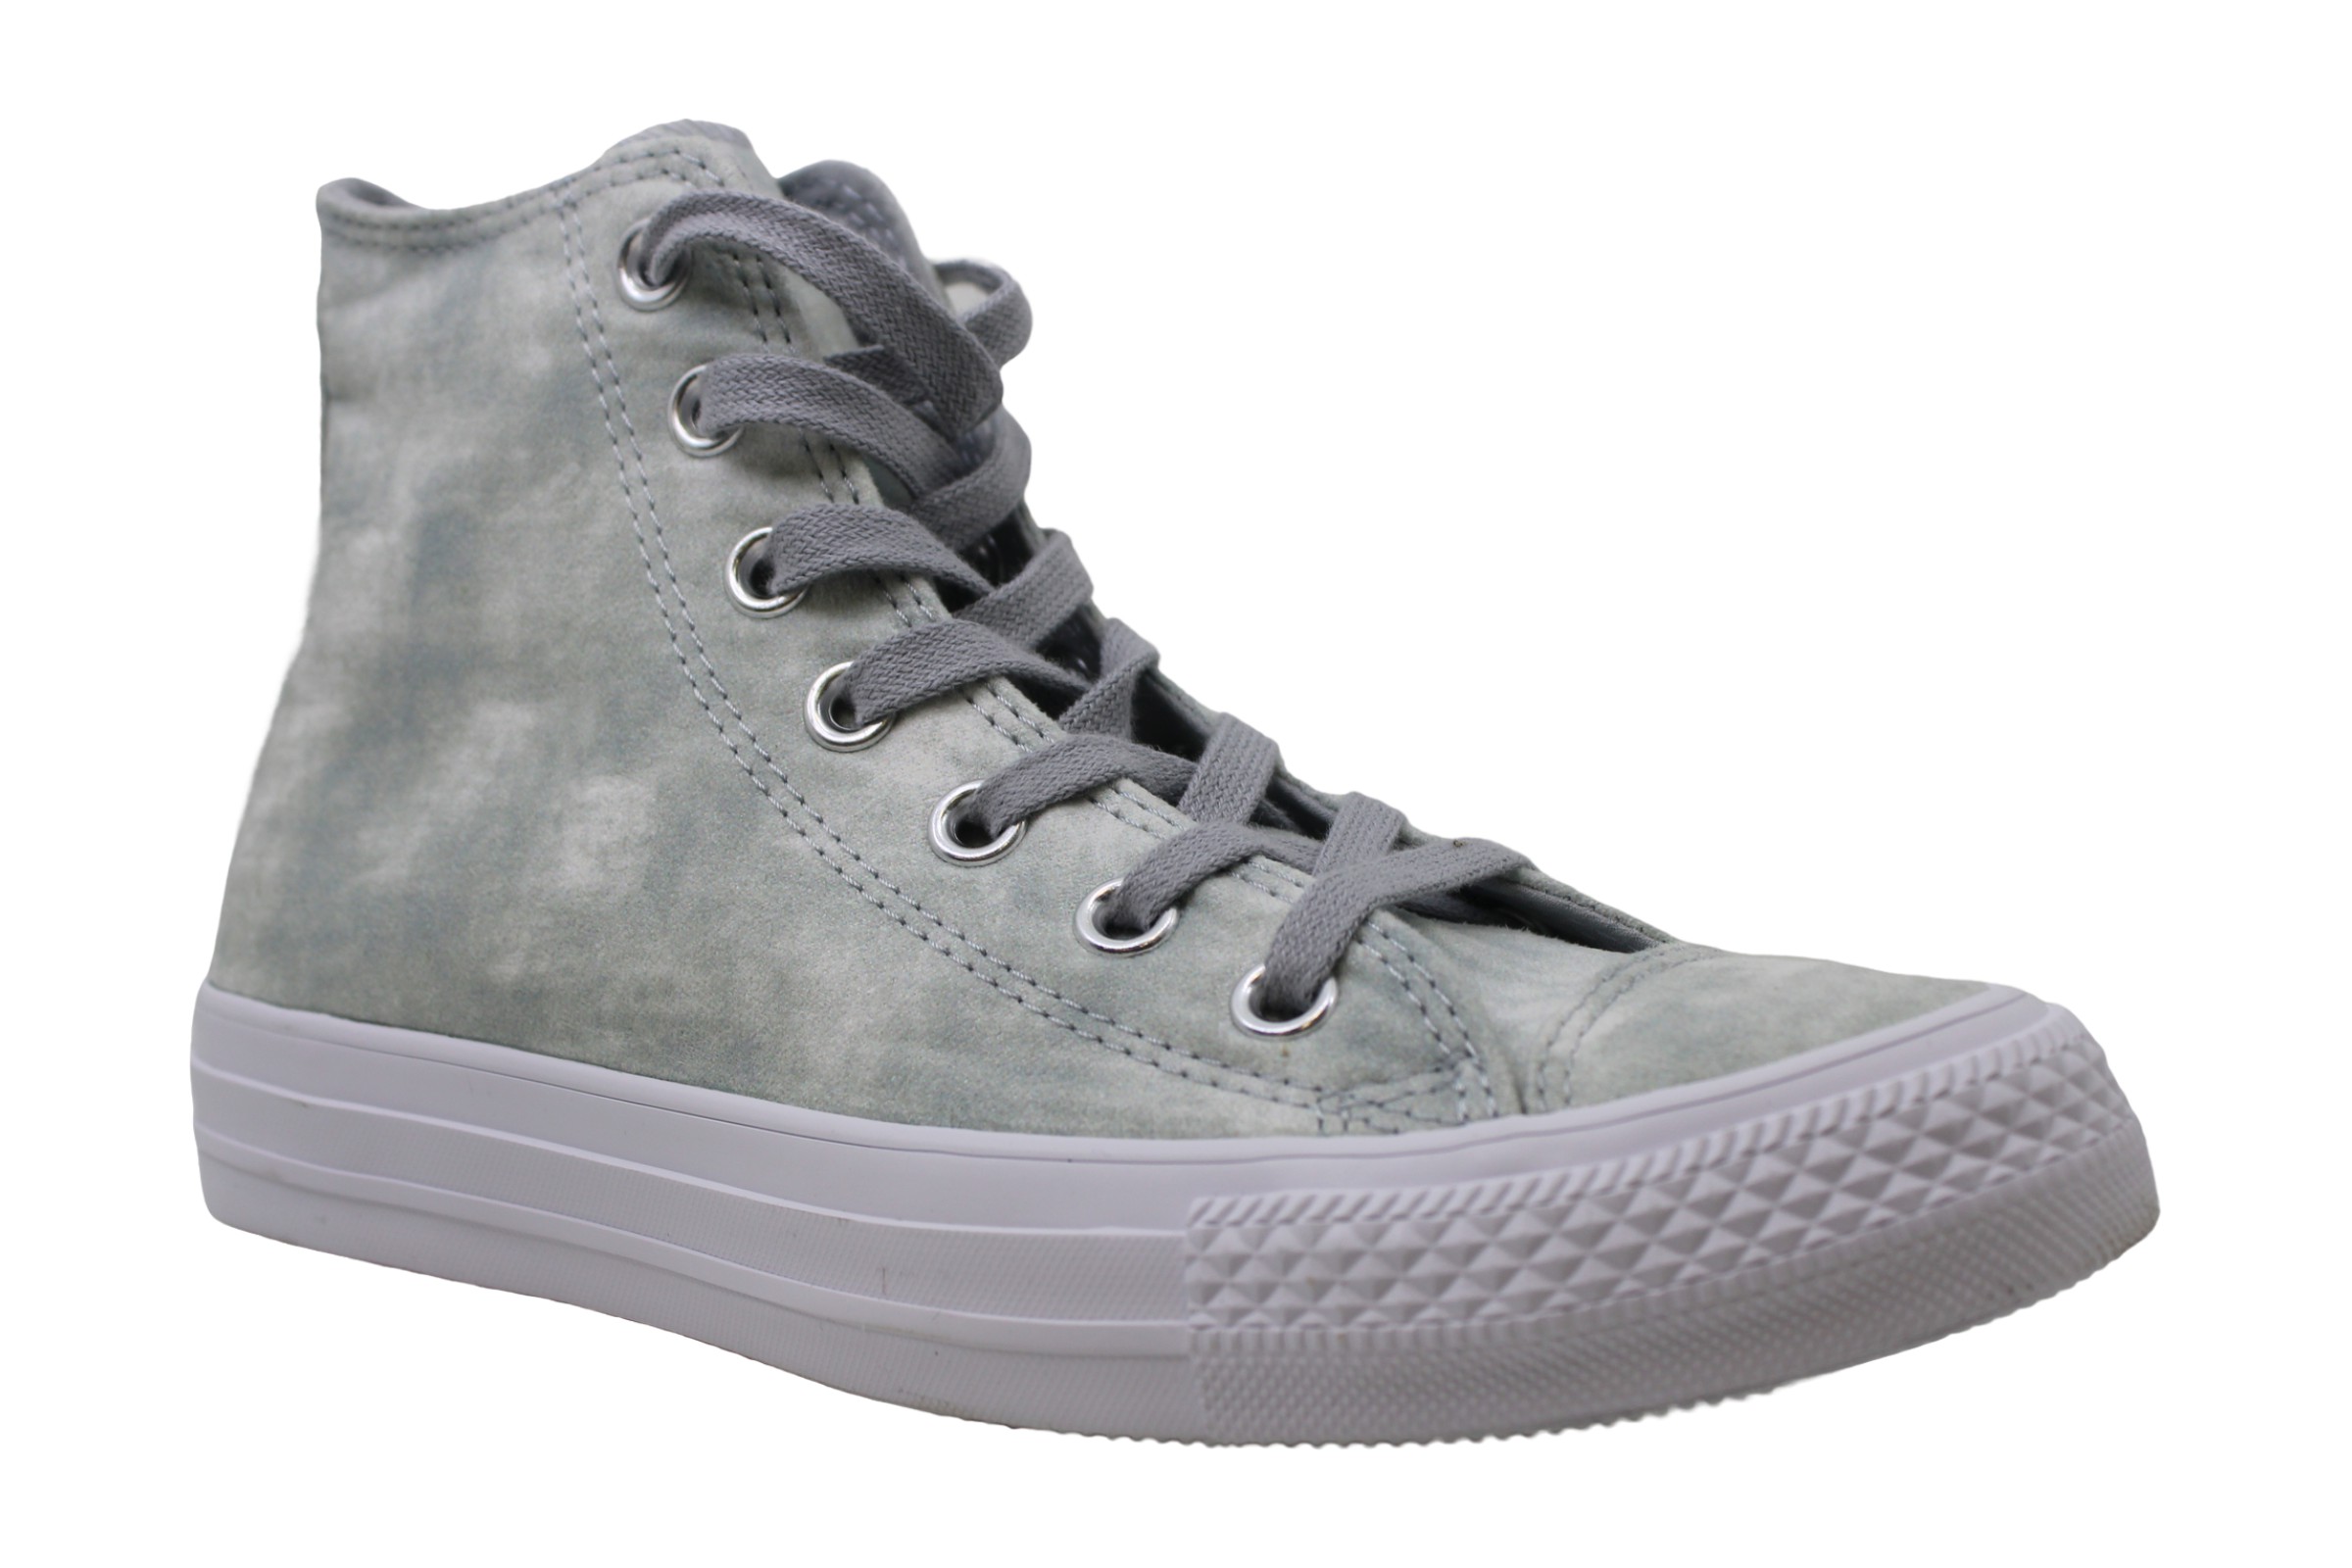 Converse Mens Fashion Sneaker in Grey Color, Size 4.5 DTV | eBay